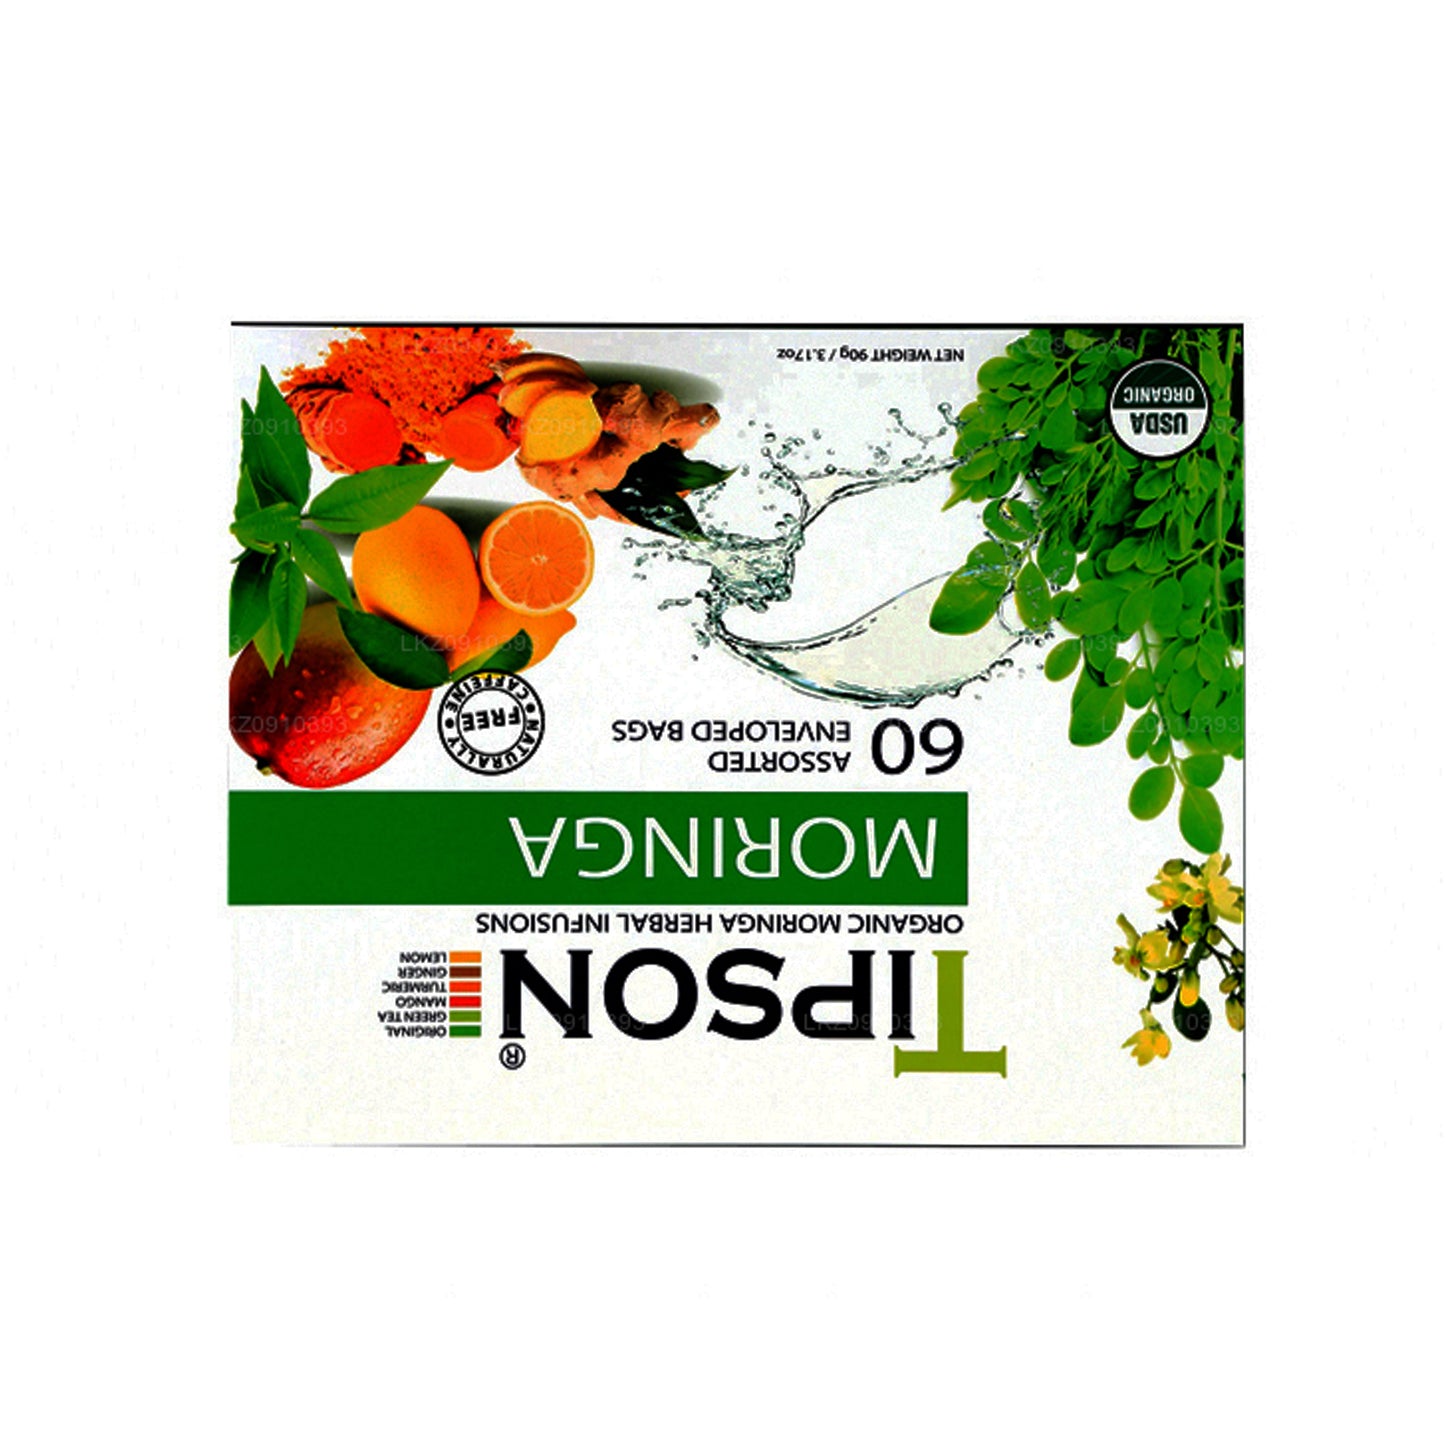 Tipson Herbata Organiczna Moringa Różne (90g)